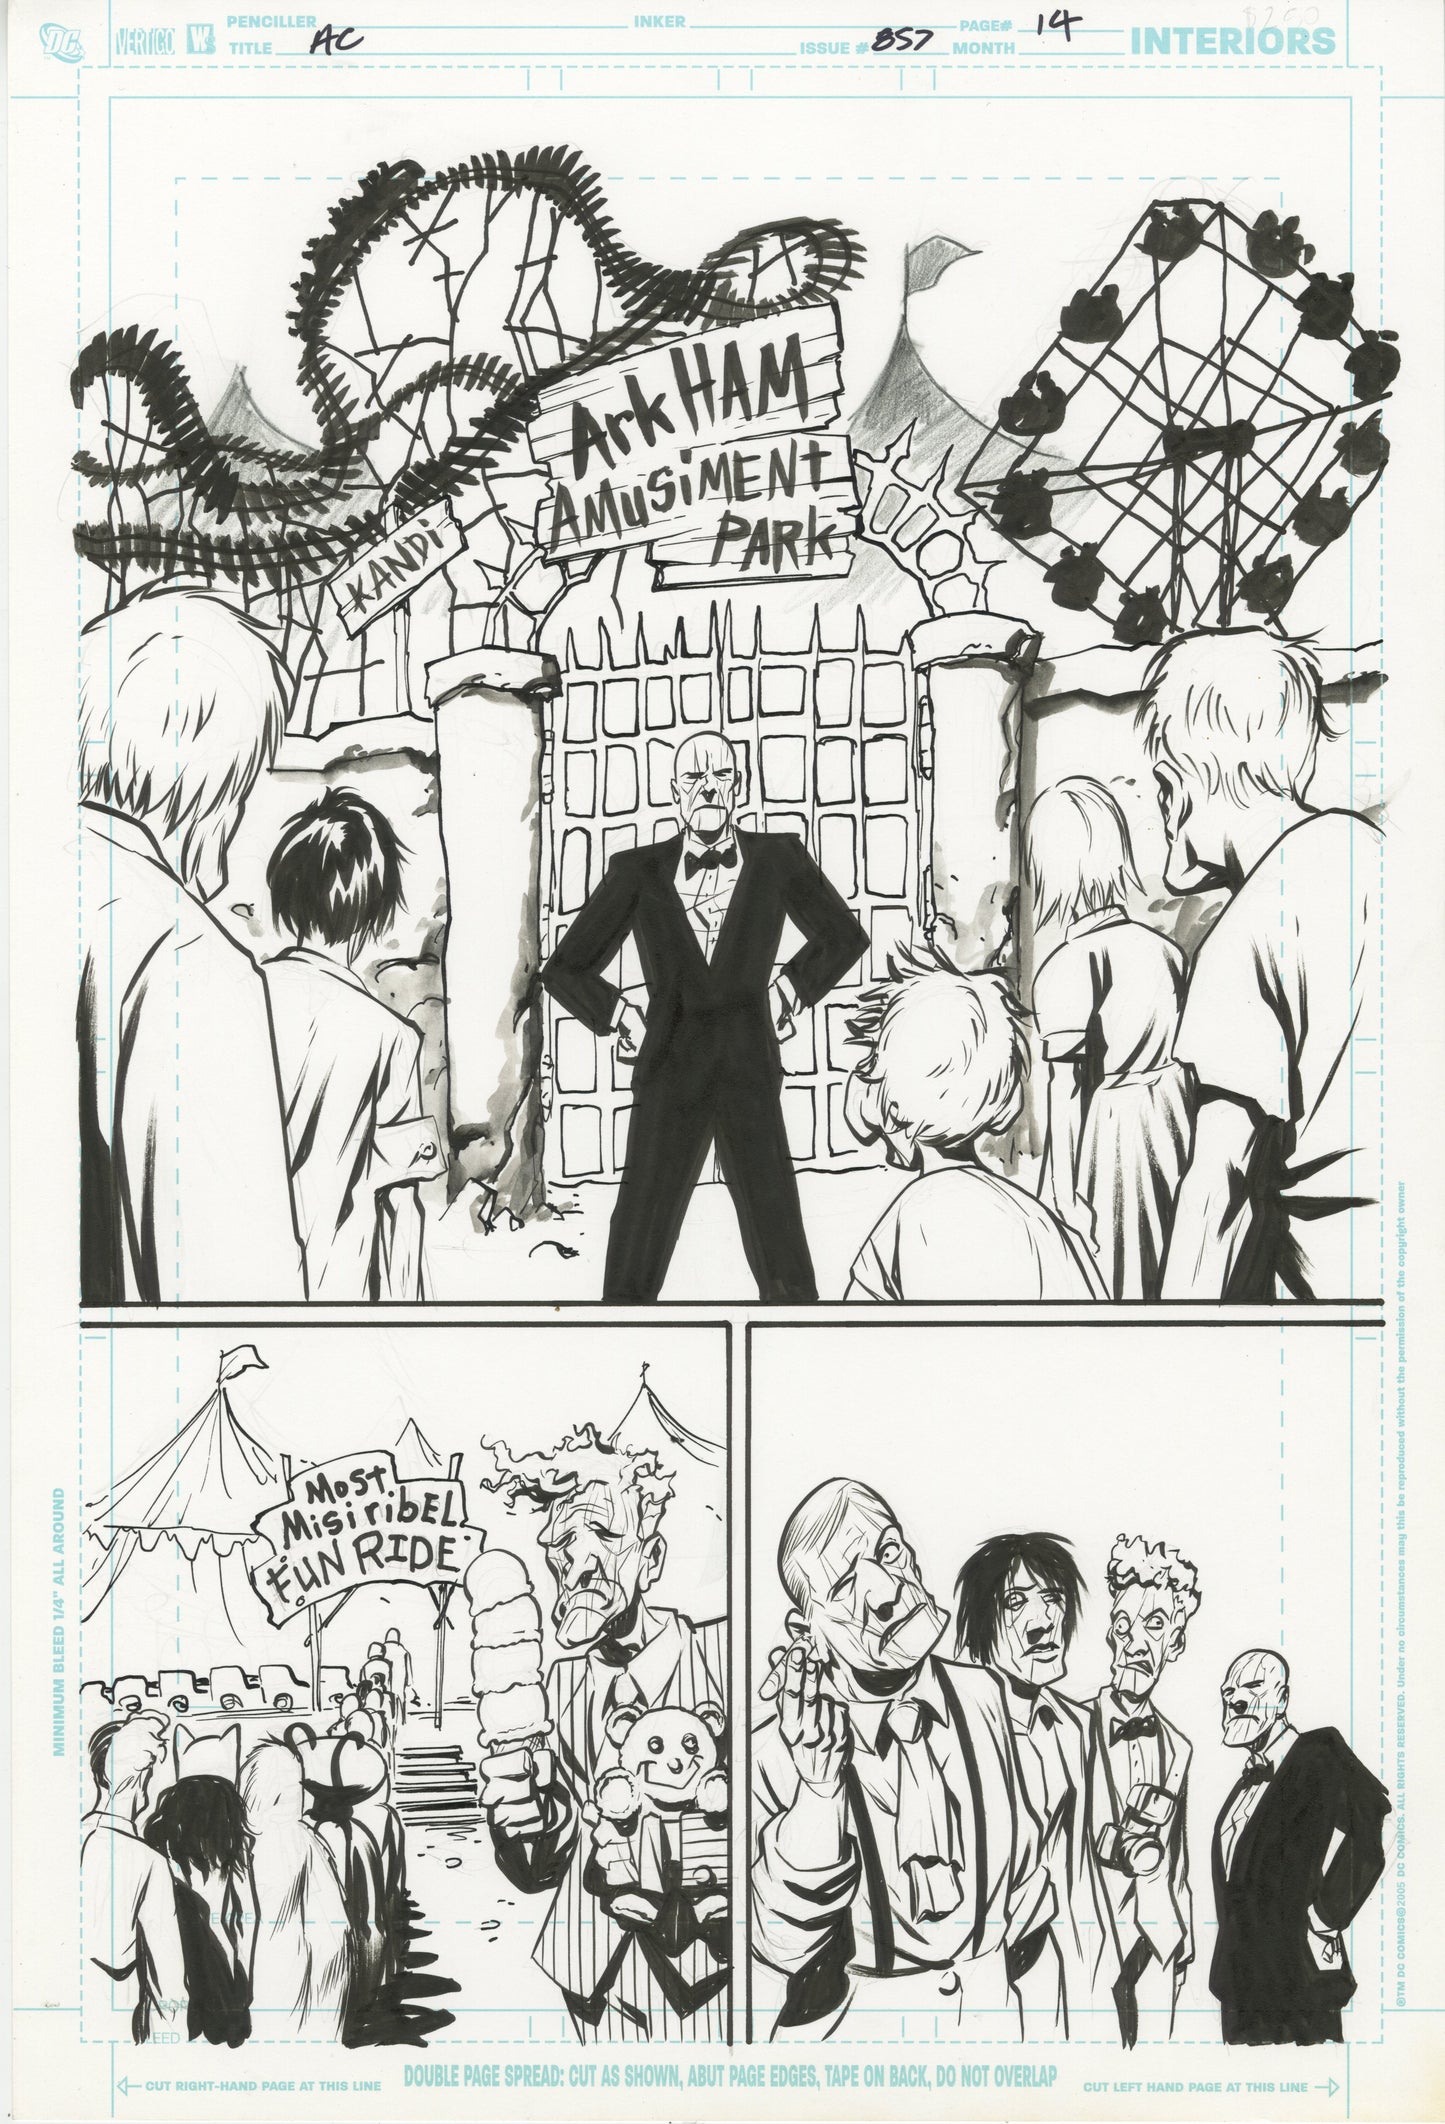 Action Comics #857, Page #14 (2007 DC, Superman: Escape From Bizarro World)